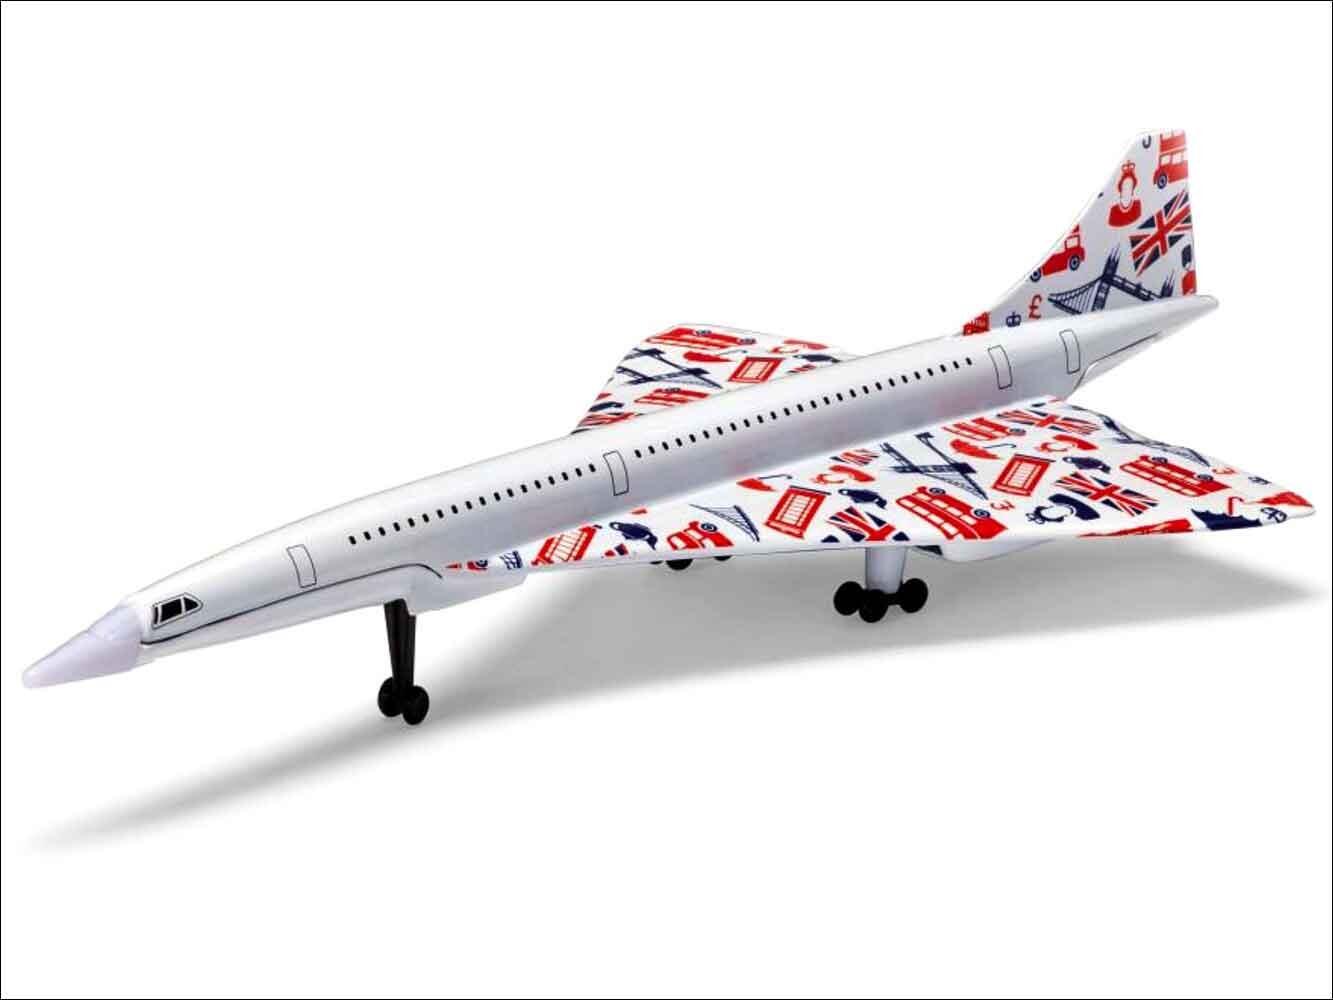 Miniature Concorde model for desktop